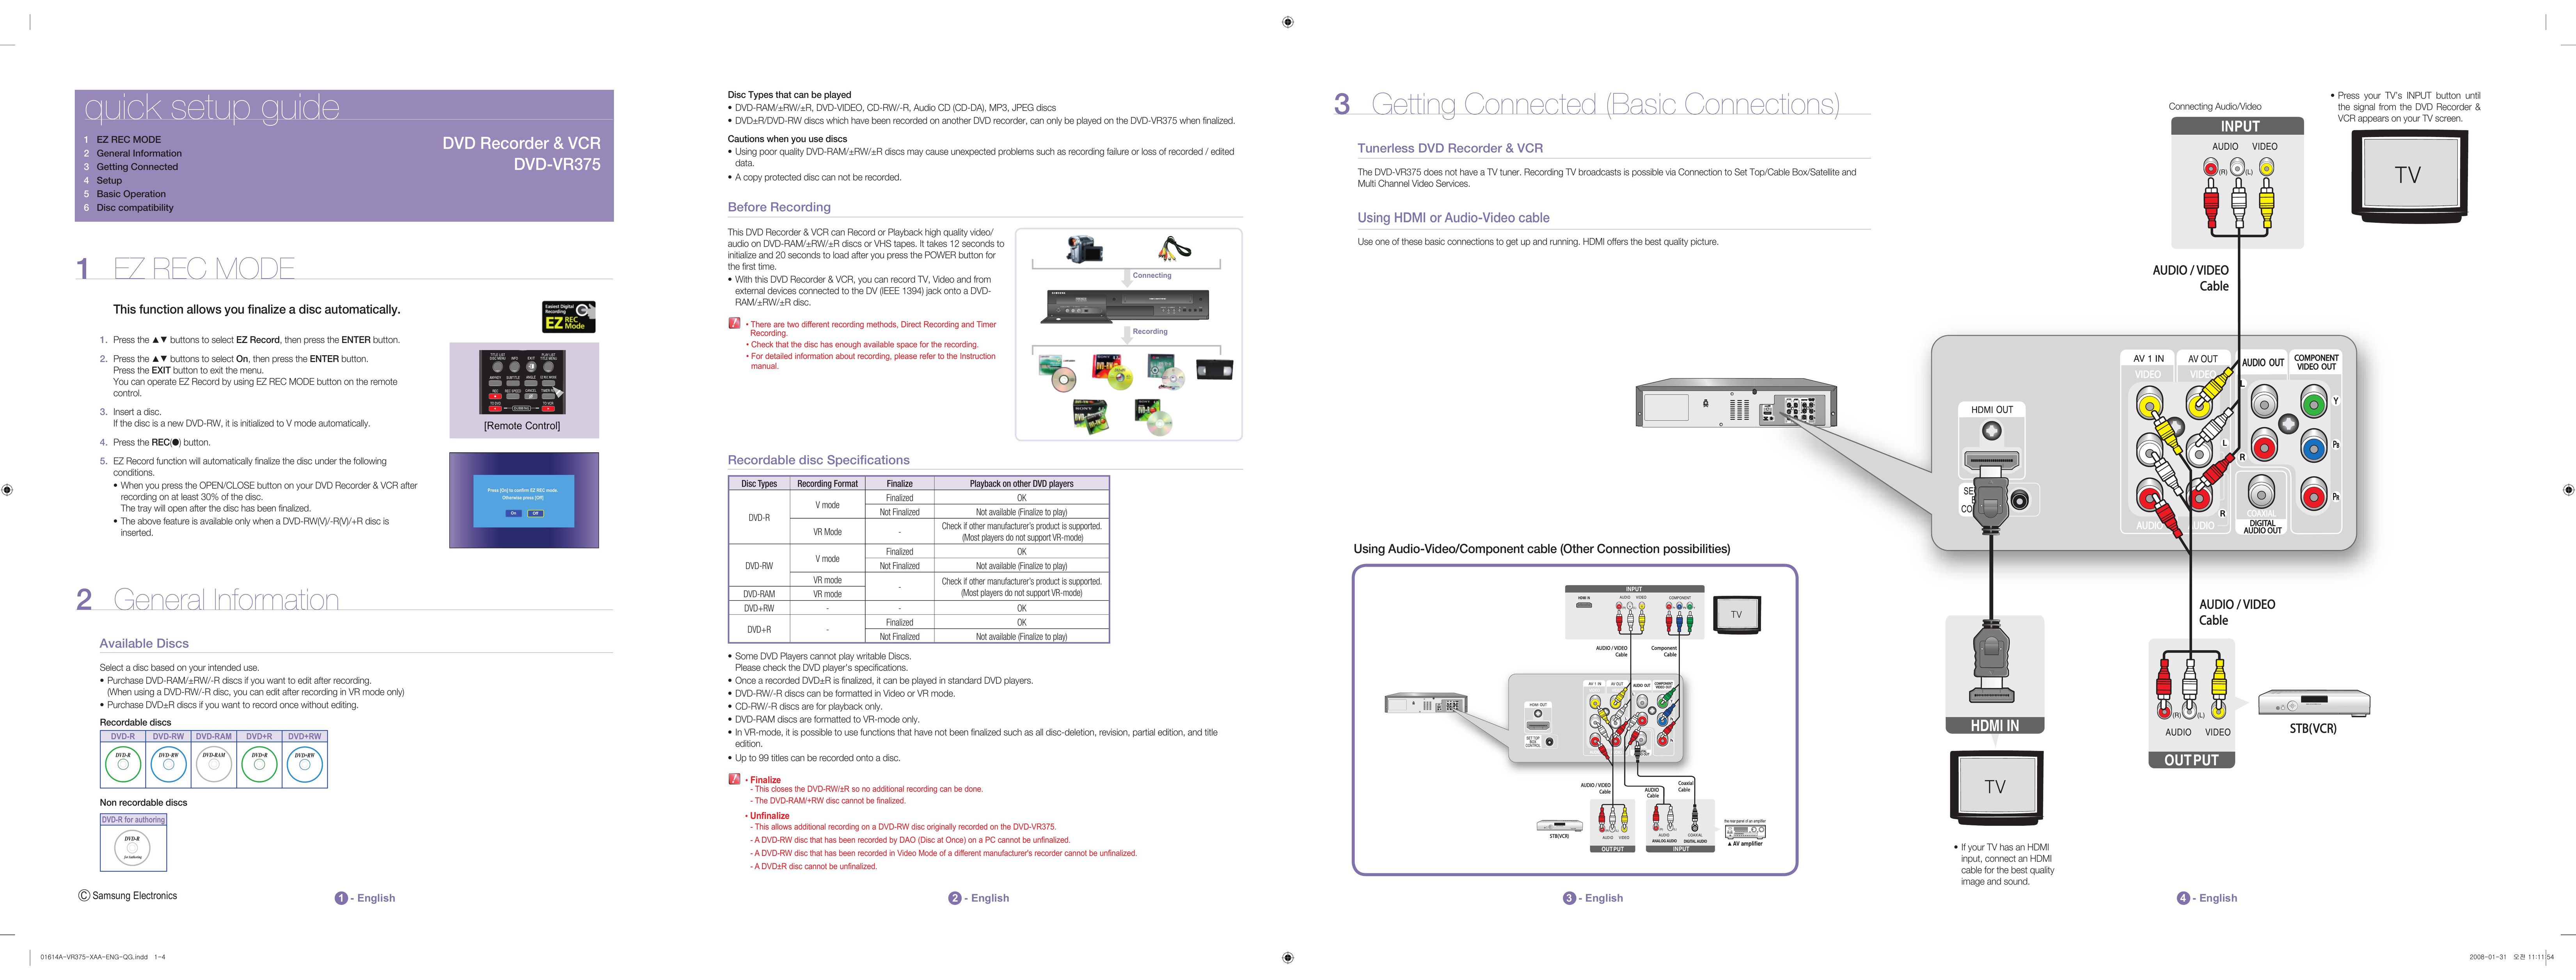 Samsung DVD-VR375 High Chair User Manual